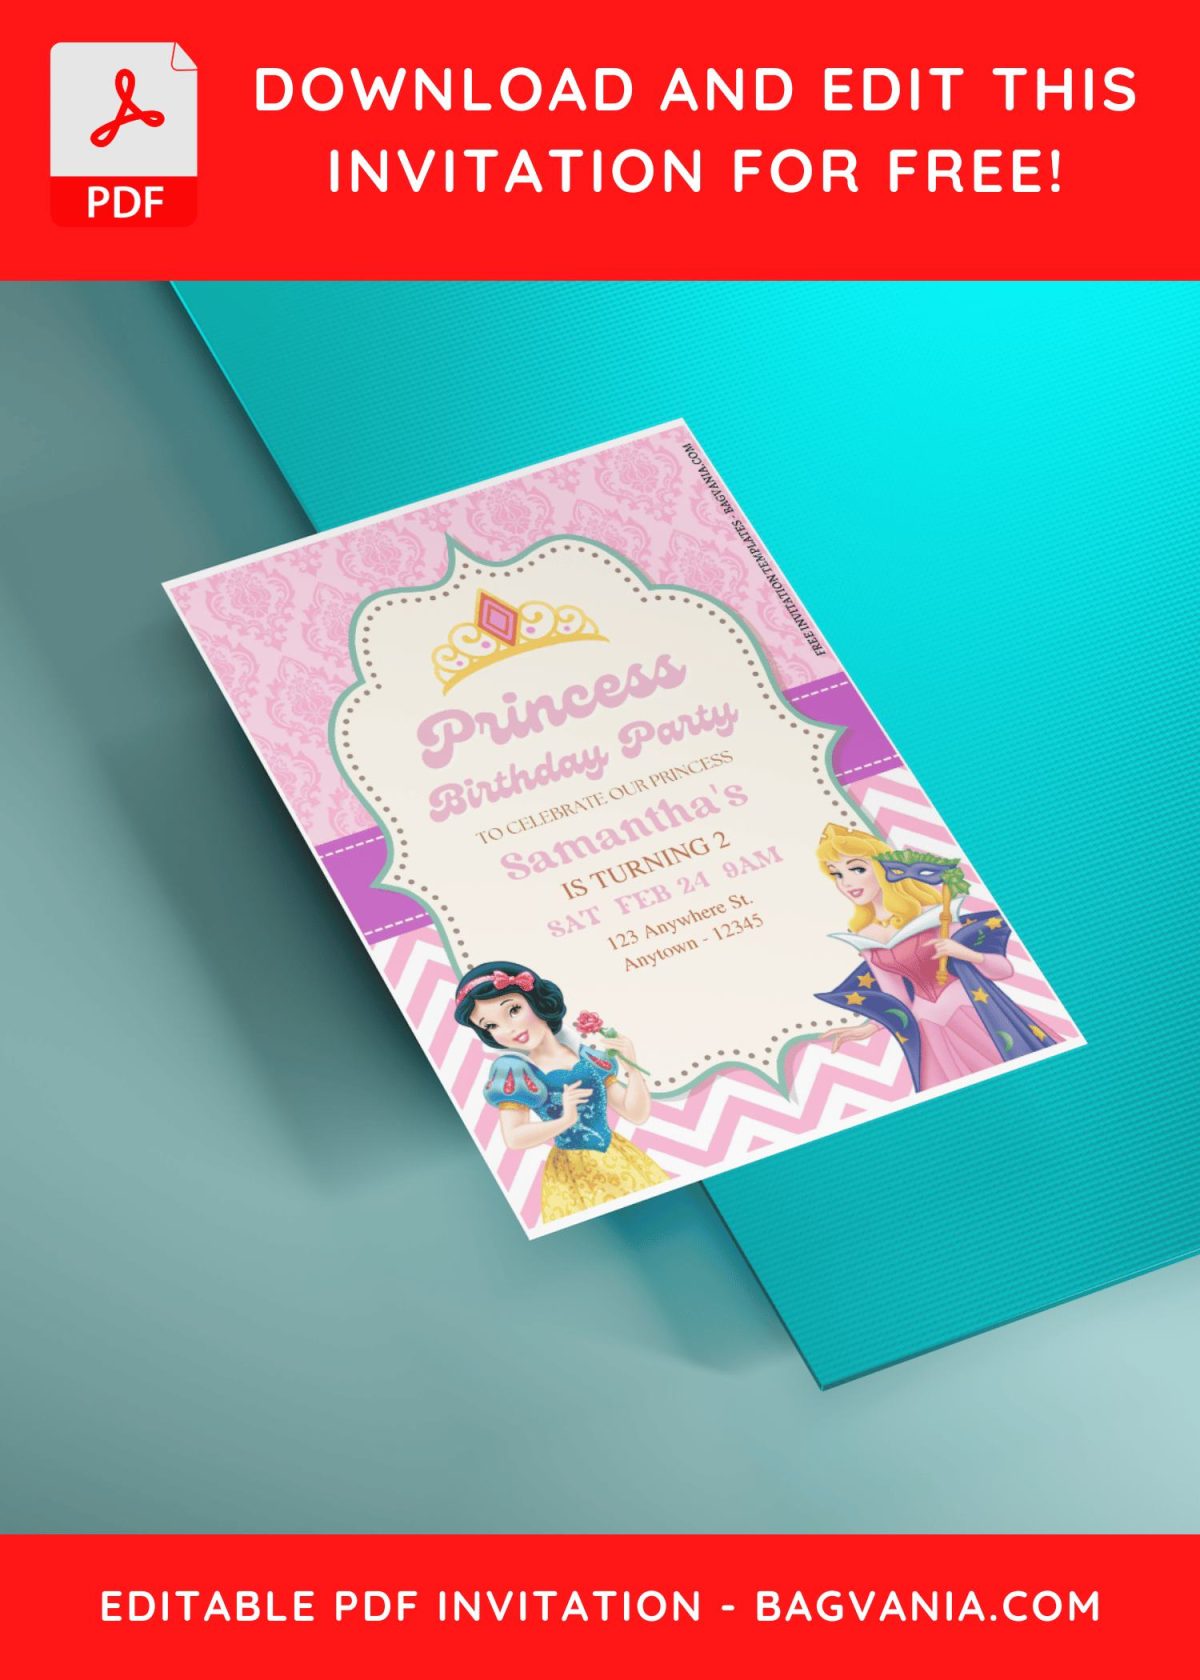 (Free Editable PDF) Disney Princess Party Magic Birthday Invitation Templates with Princess Aurrora